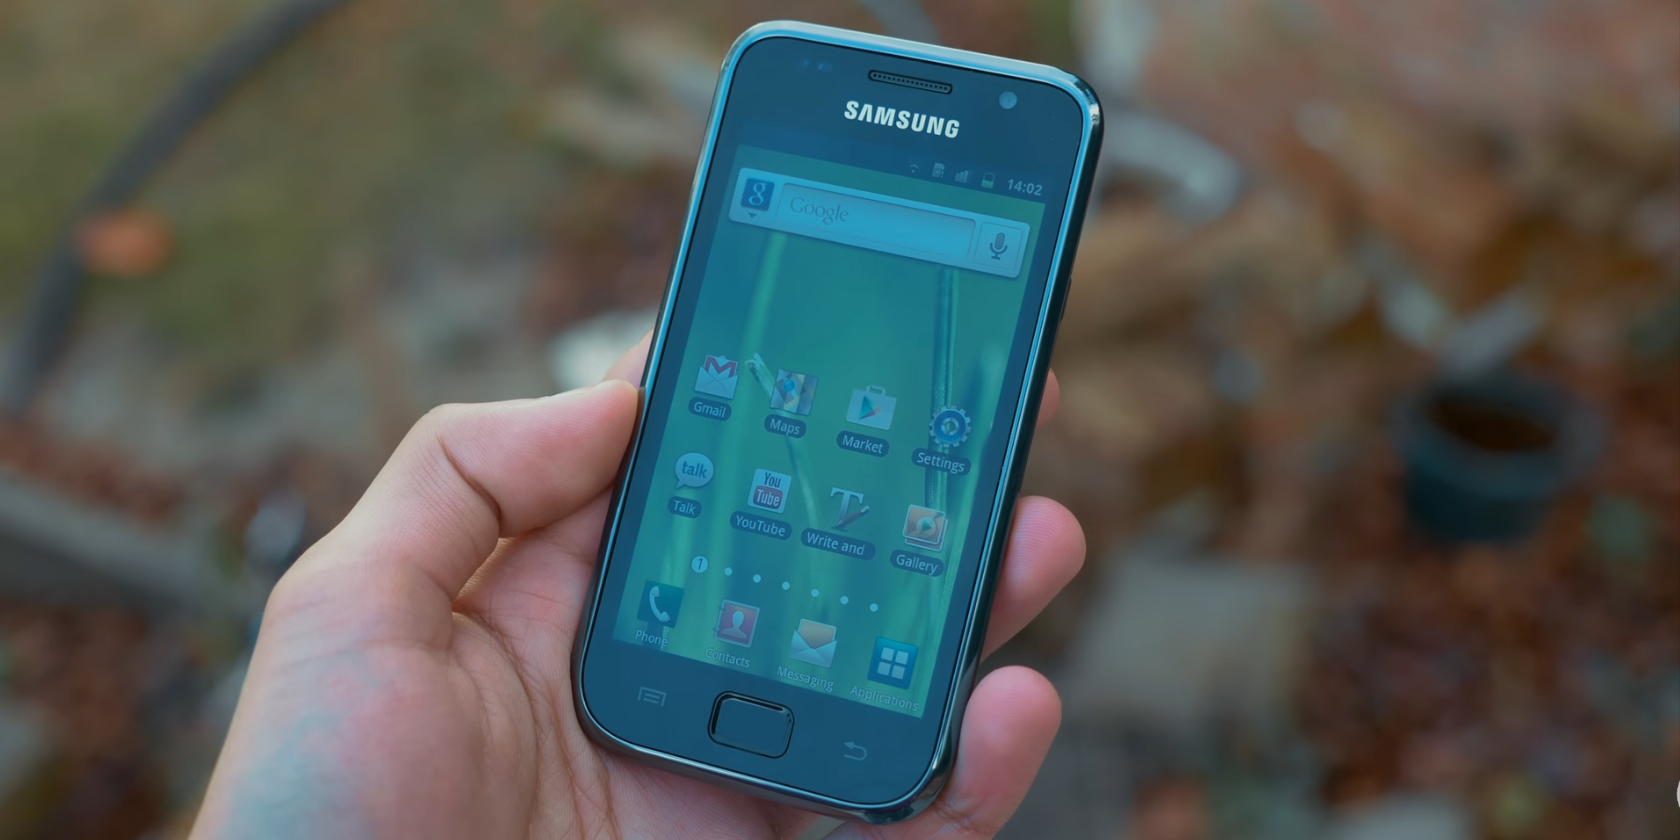 The original Samsung Galaxy S